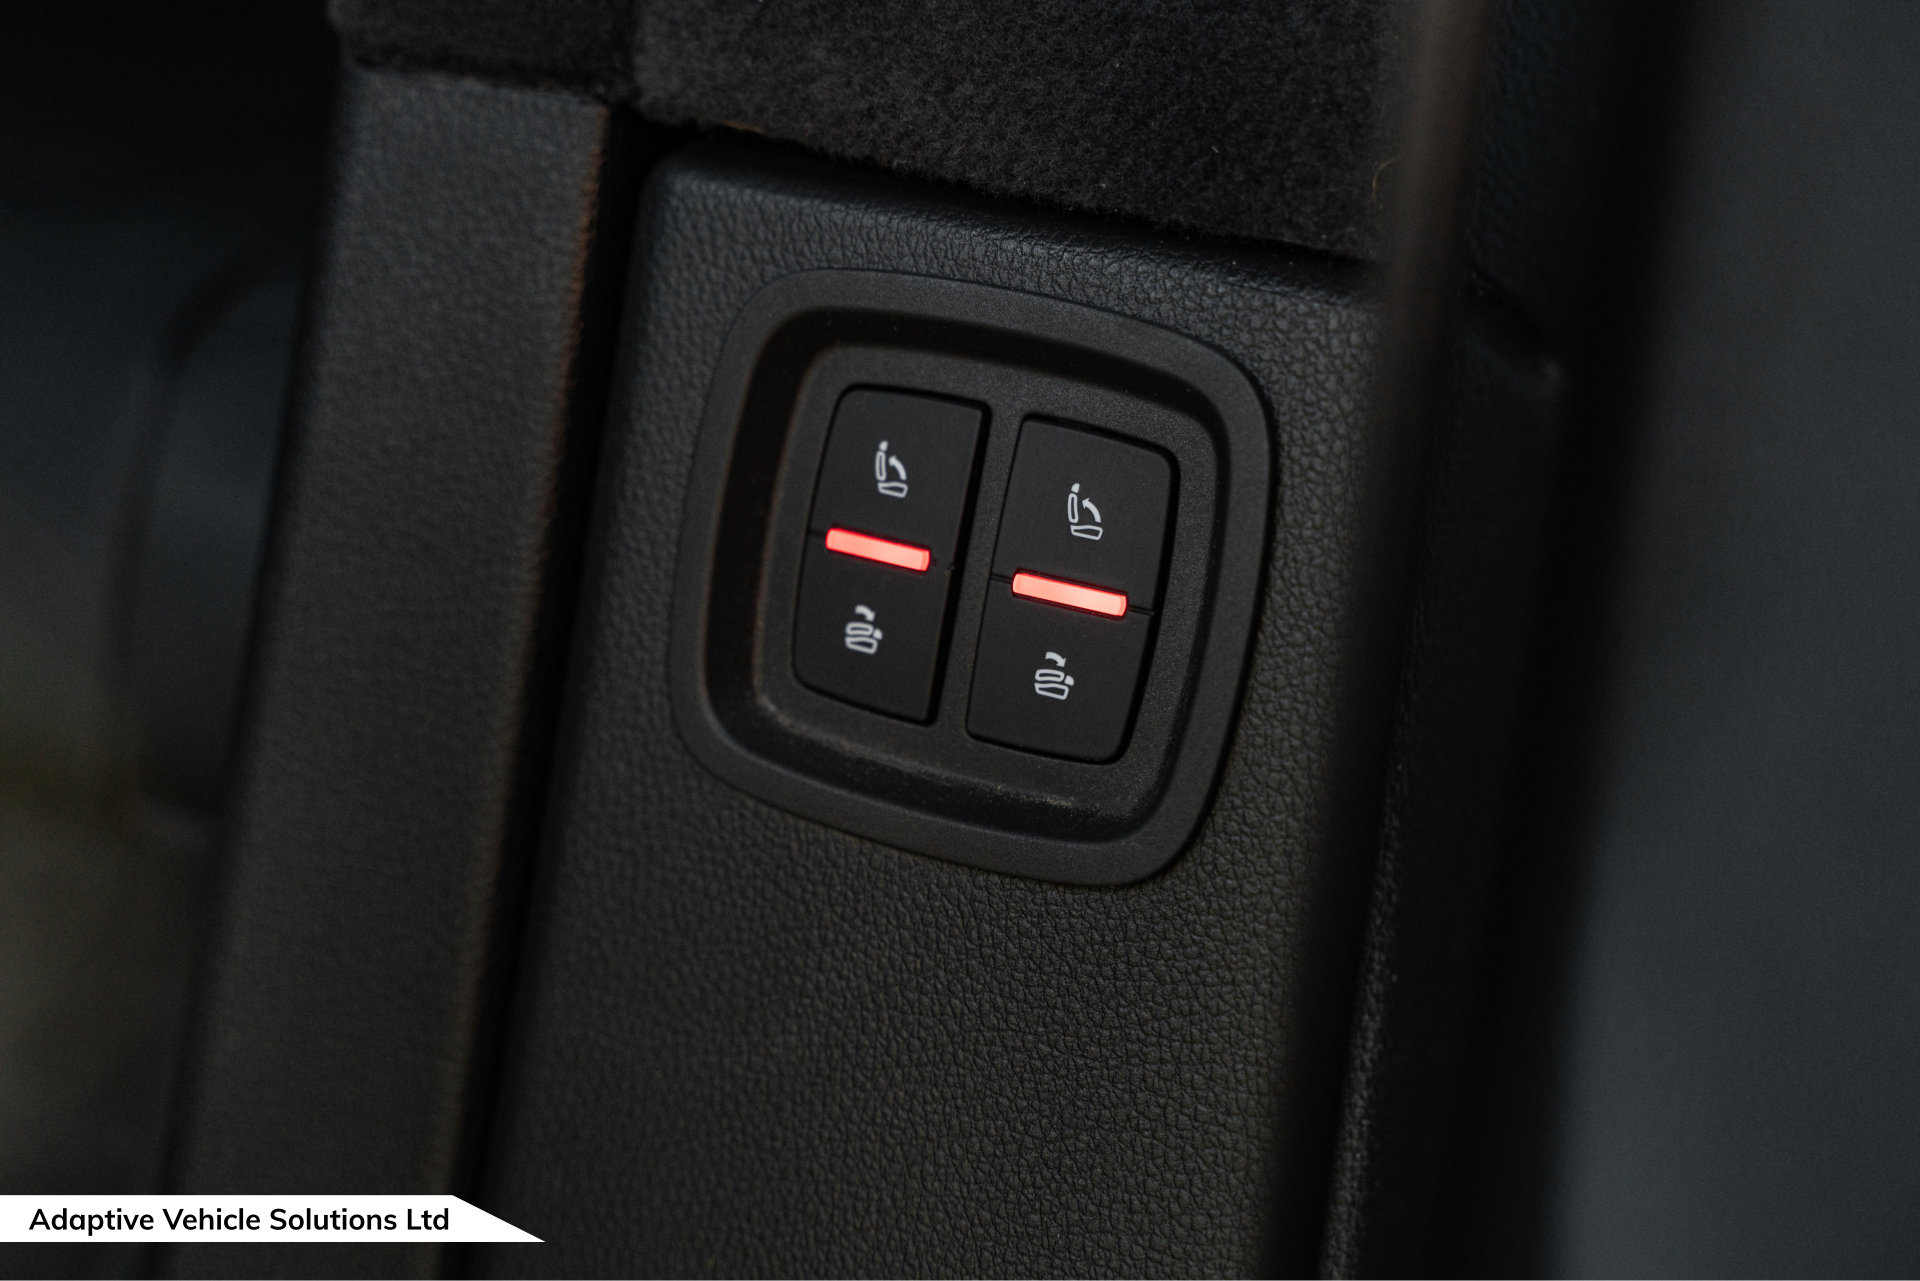 2019 Audi Q7 Vorsprung White rear seat controls